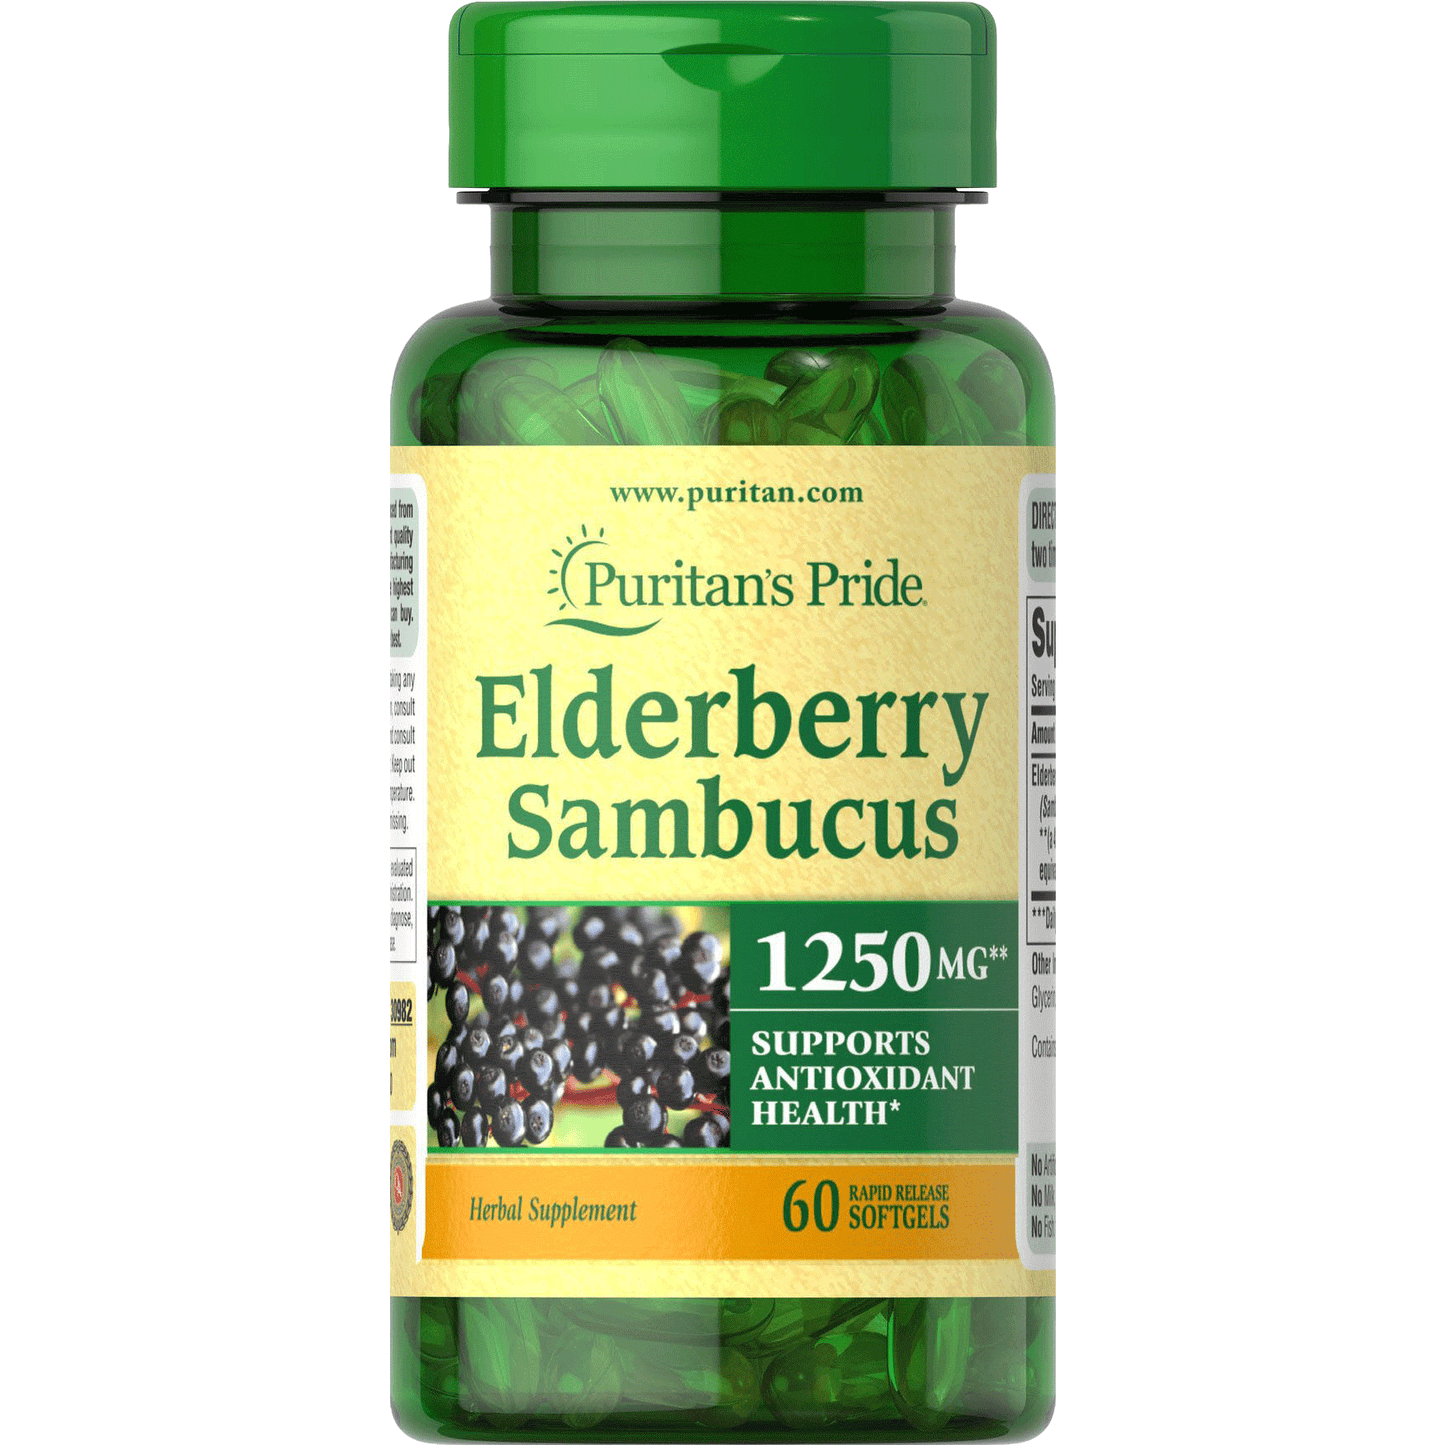 Elderberry Sambucus 1250mg 60 softgels